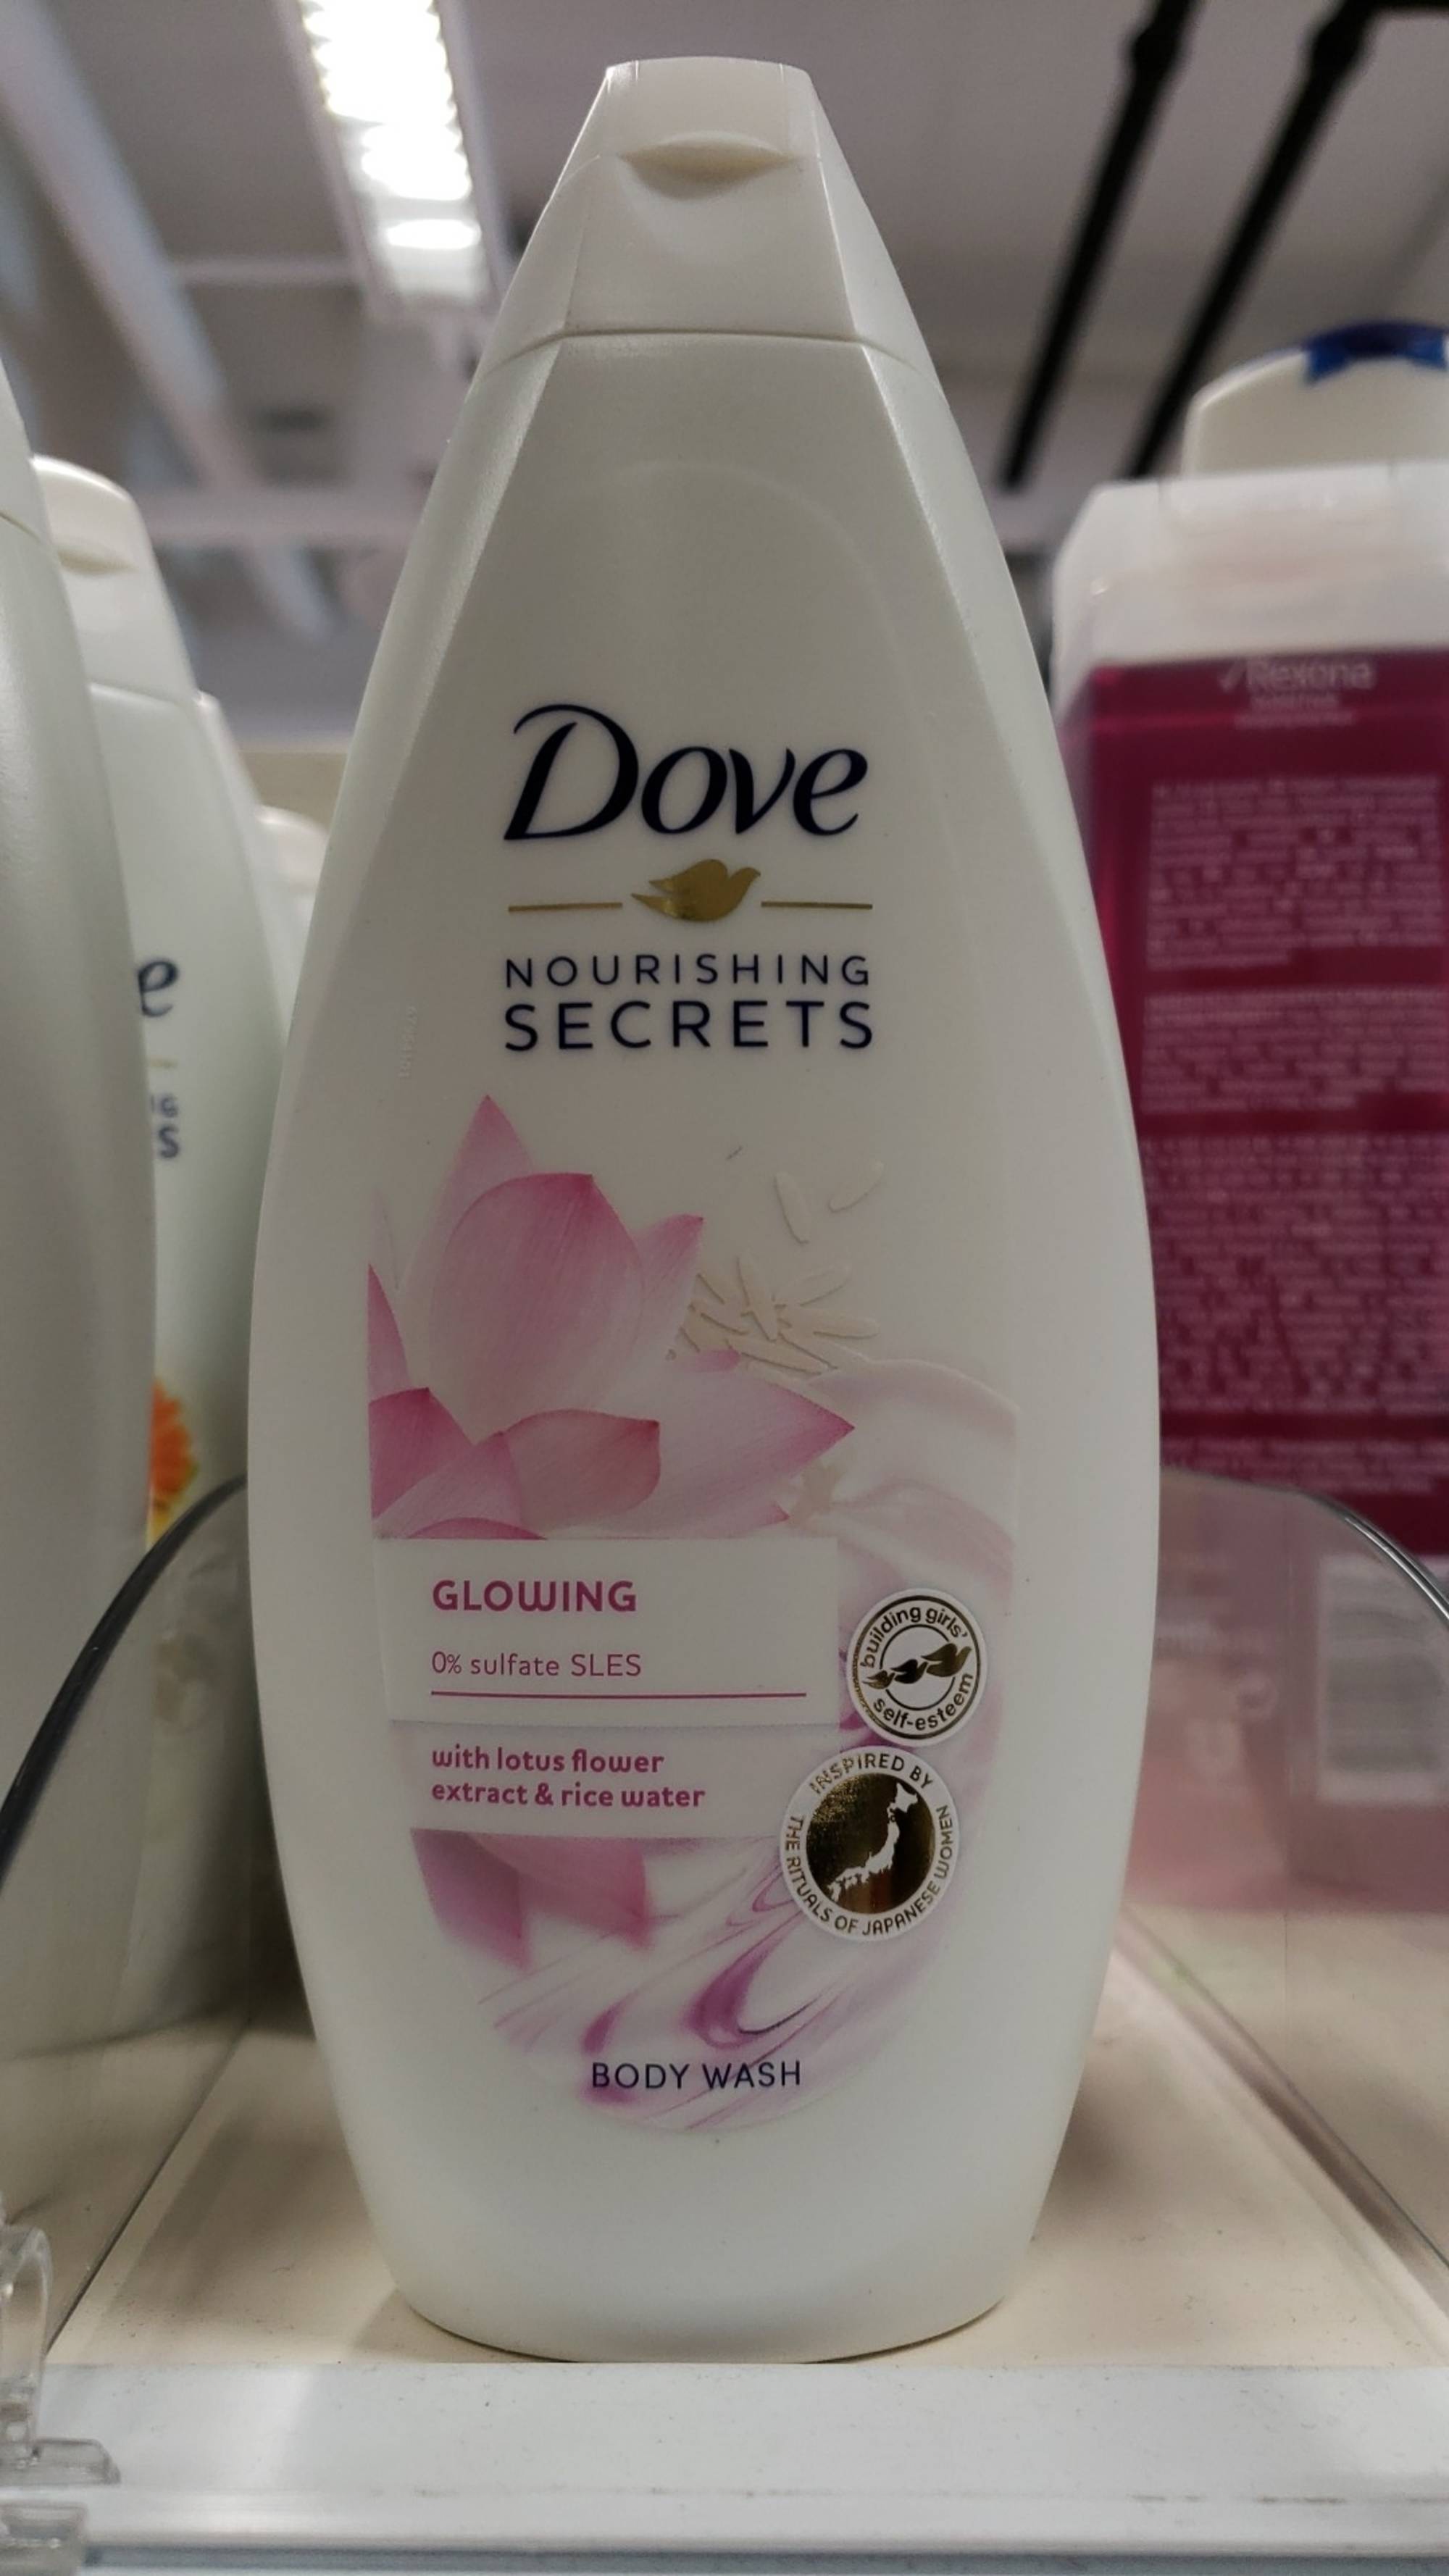 DOVE - Nourishing secrets - Body wash